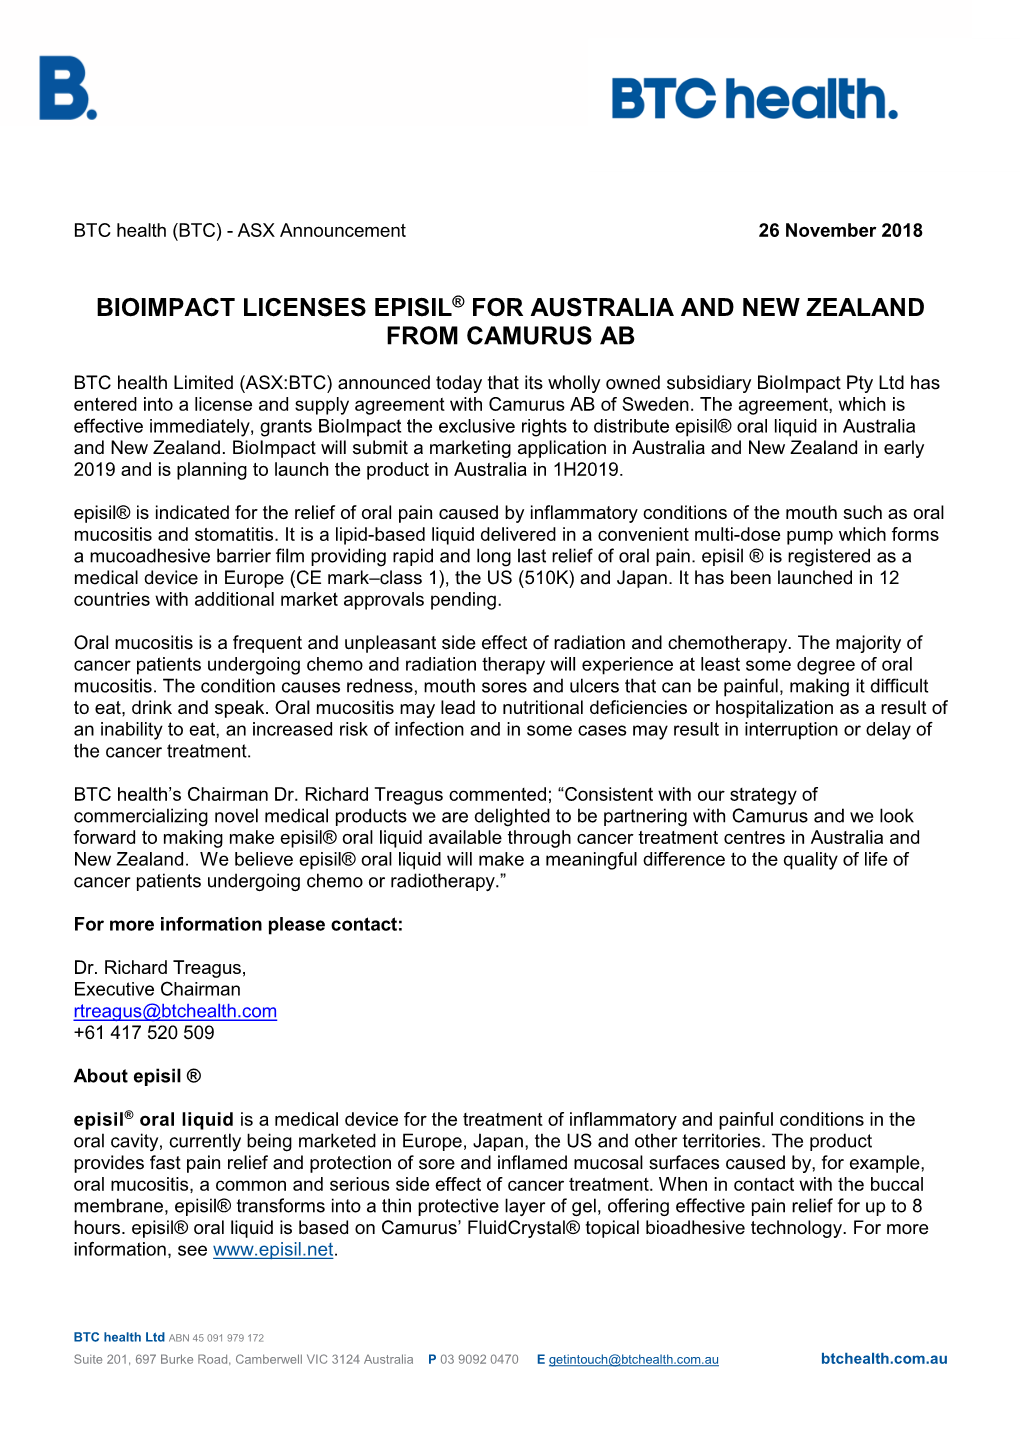 Bioimpact Licenses Episil for Australia and New Zealand